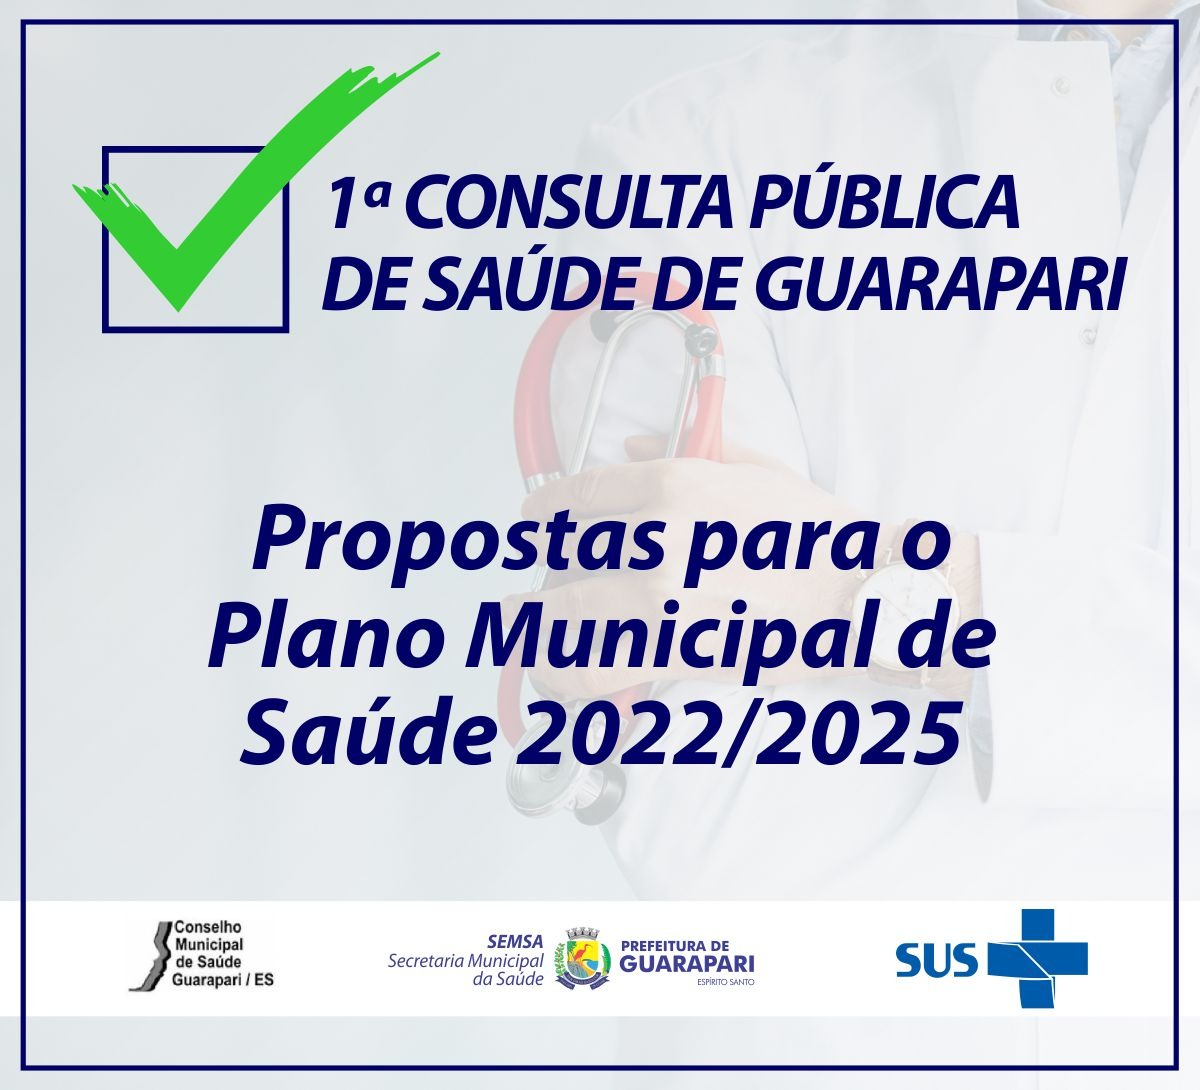 Prefeitura de Guarapari abre primeira consulta pública sobre saúde no município